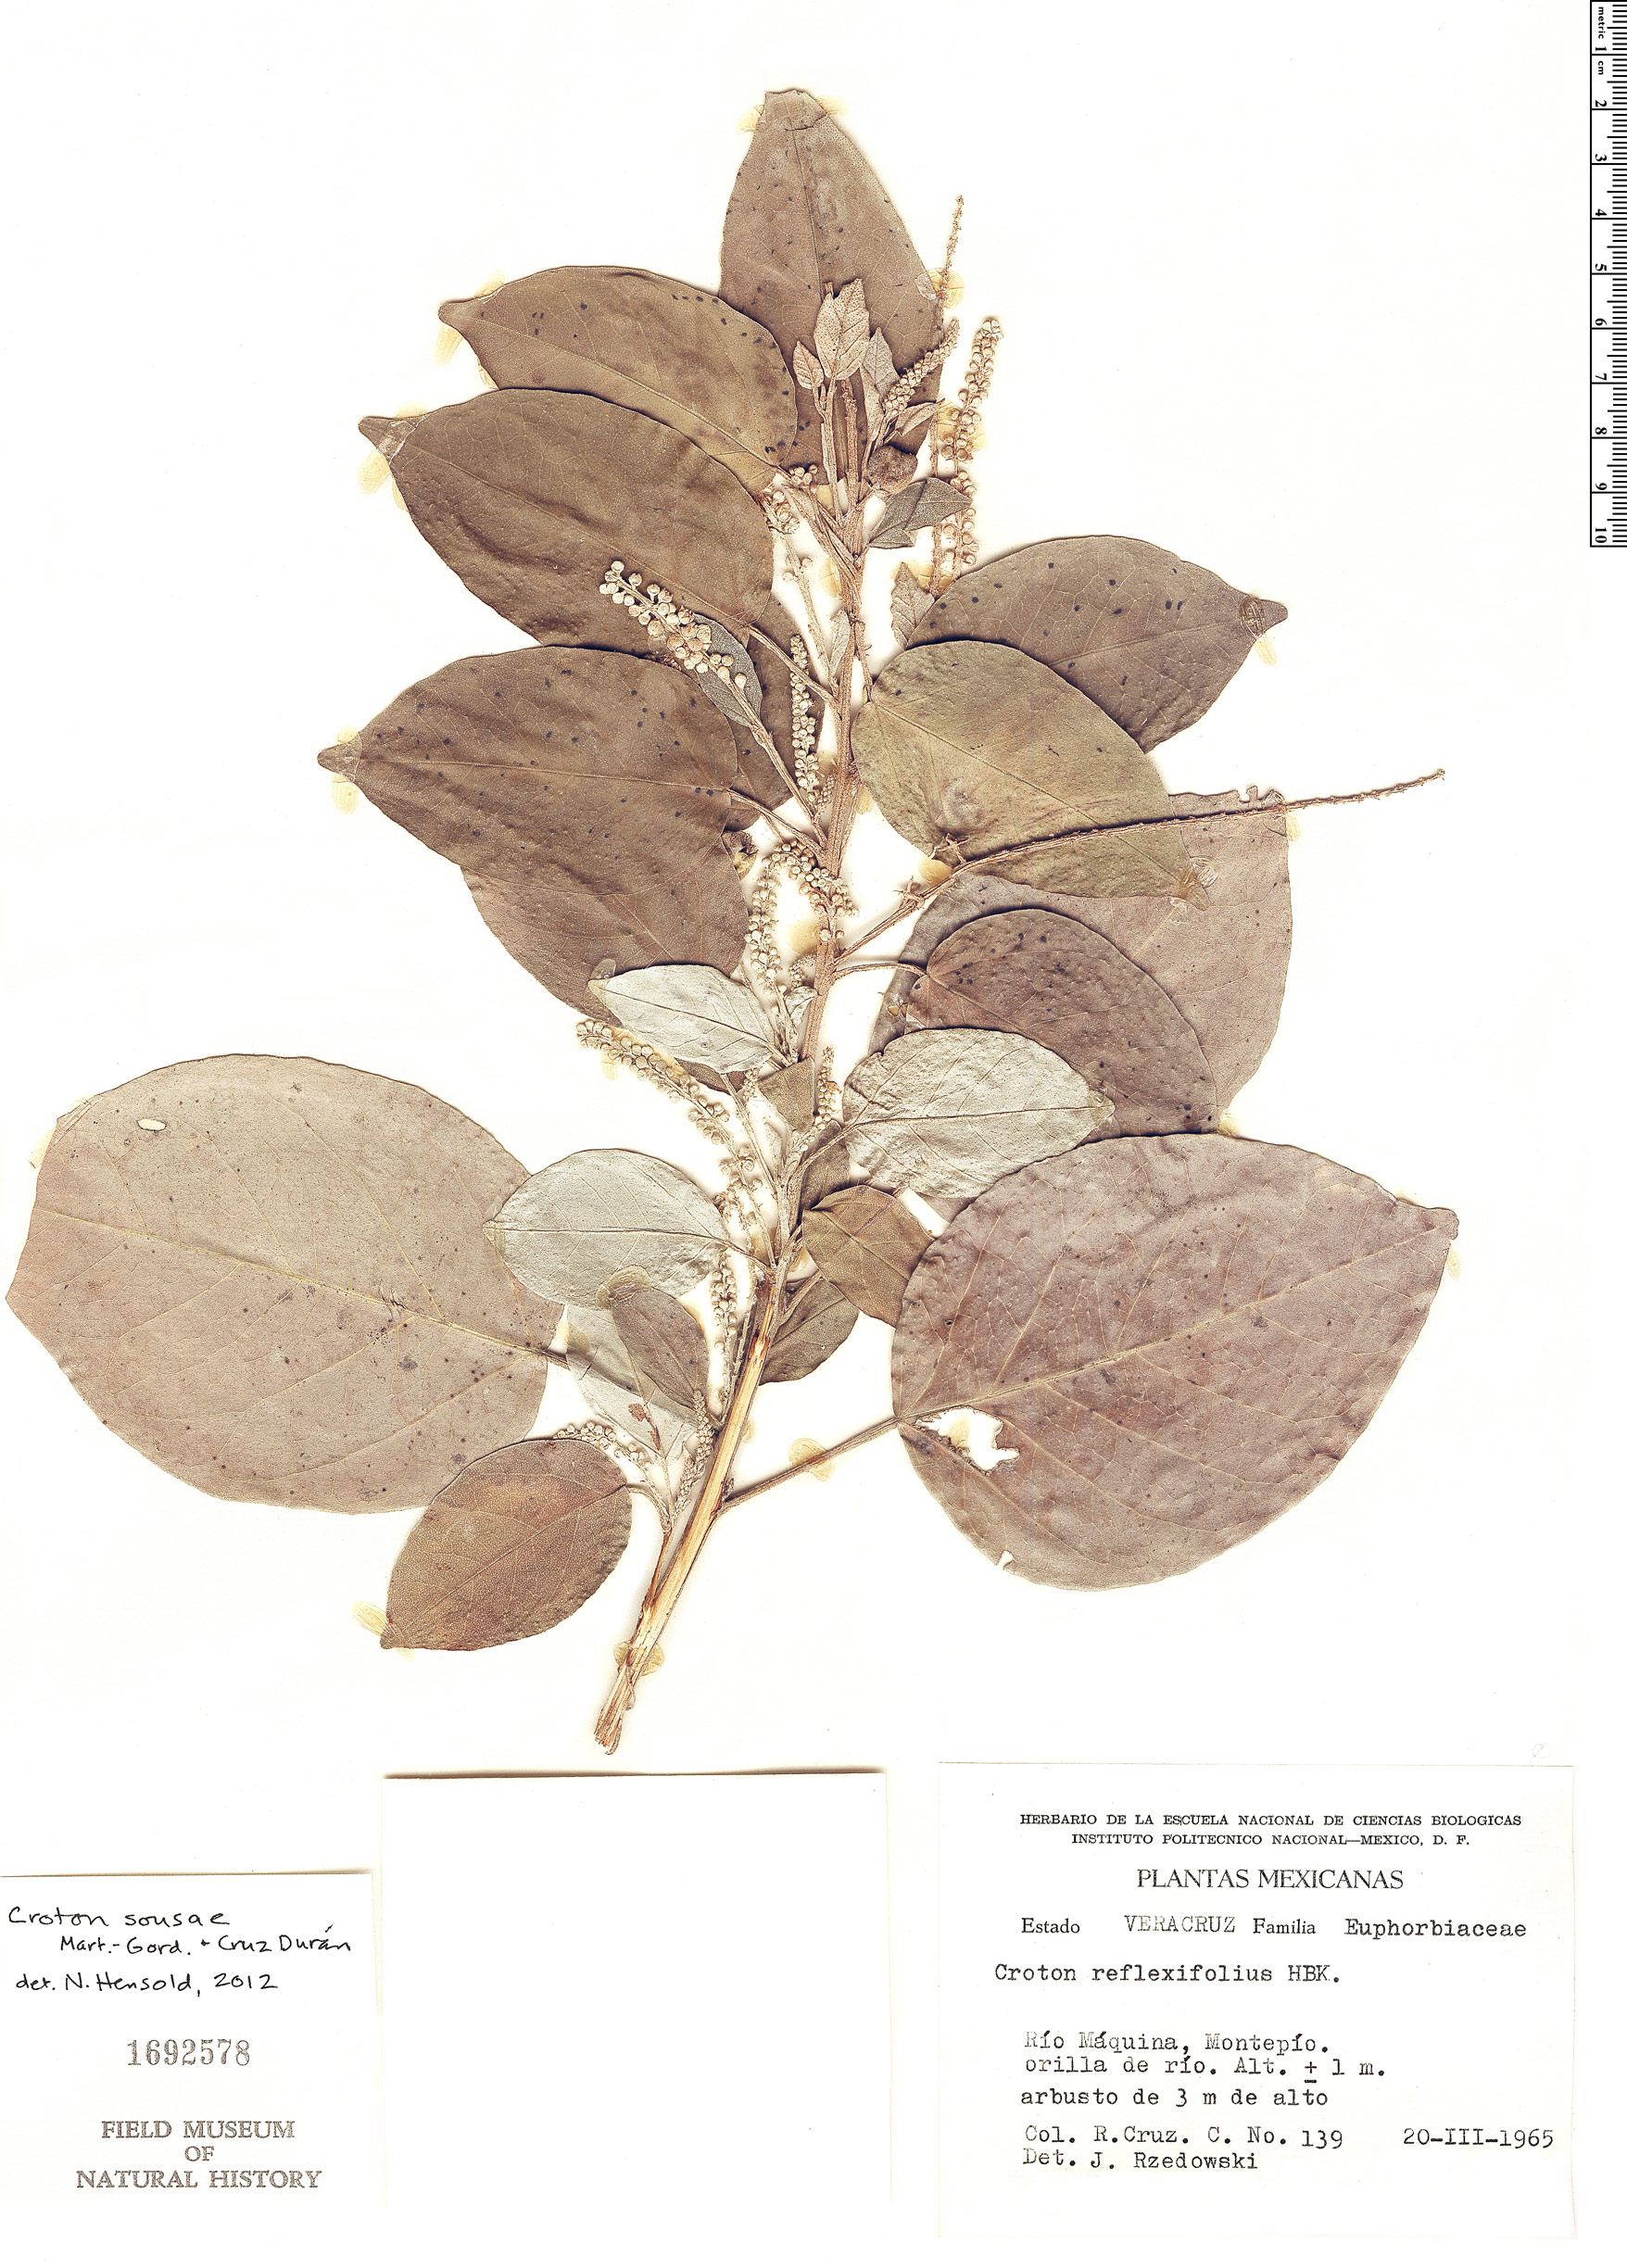 Croton sousae image